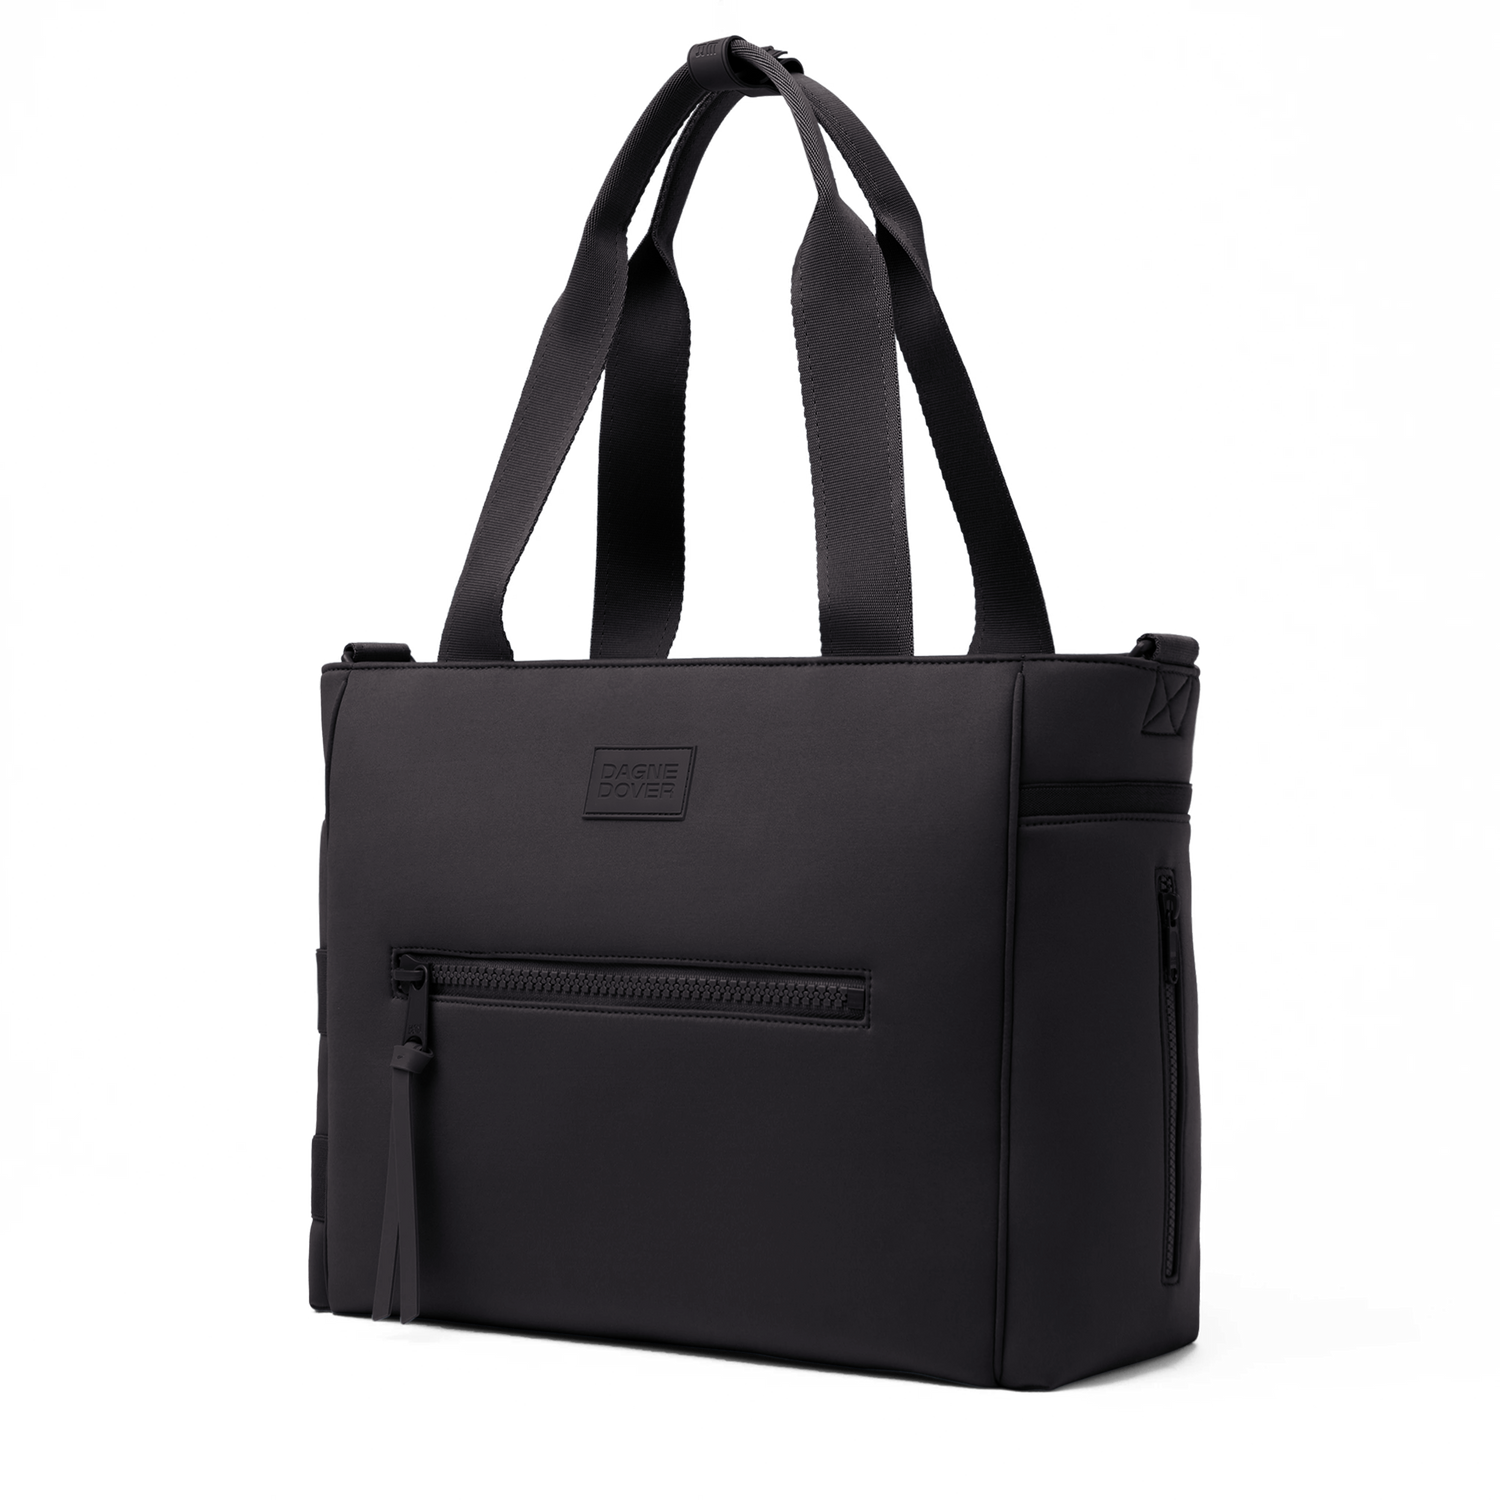 Dagne Dover Women's Tote Bags - Black